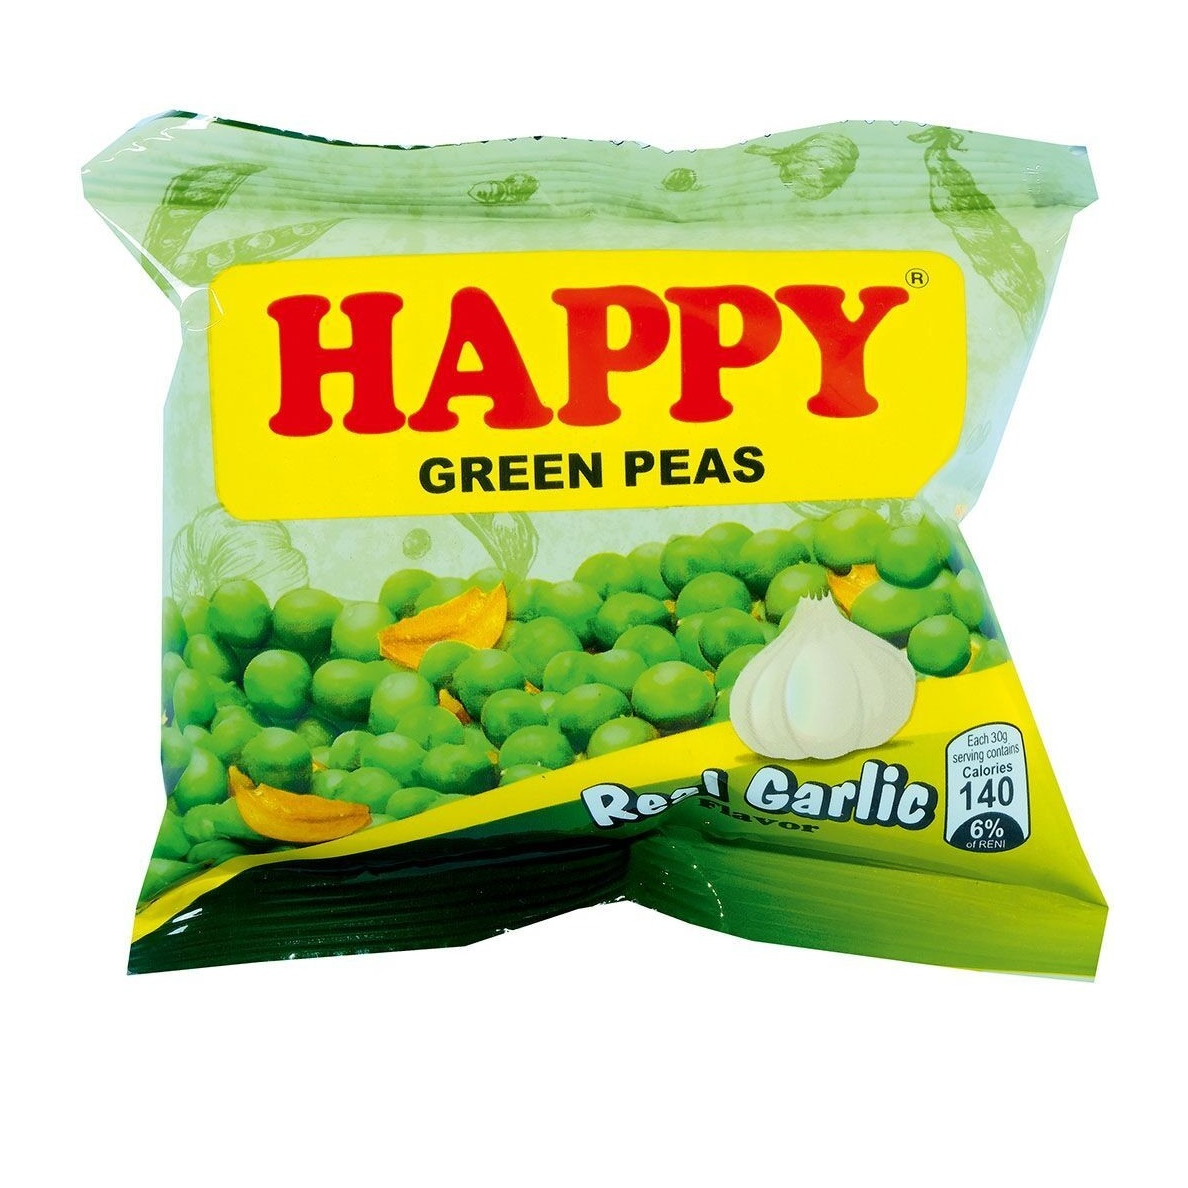 HAPPY GREEN PEAS